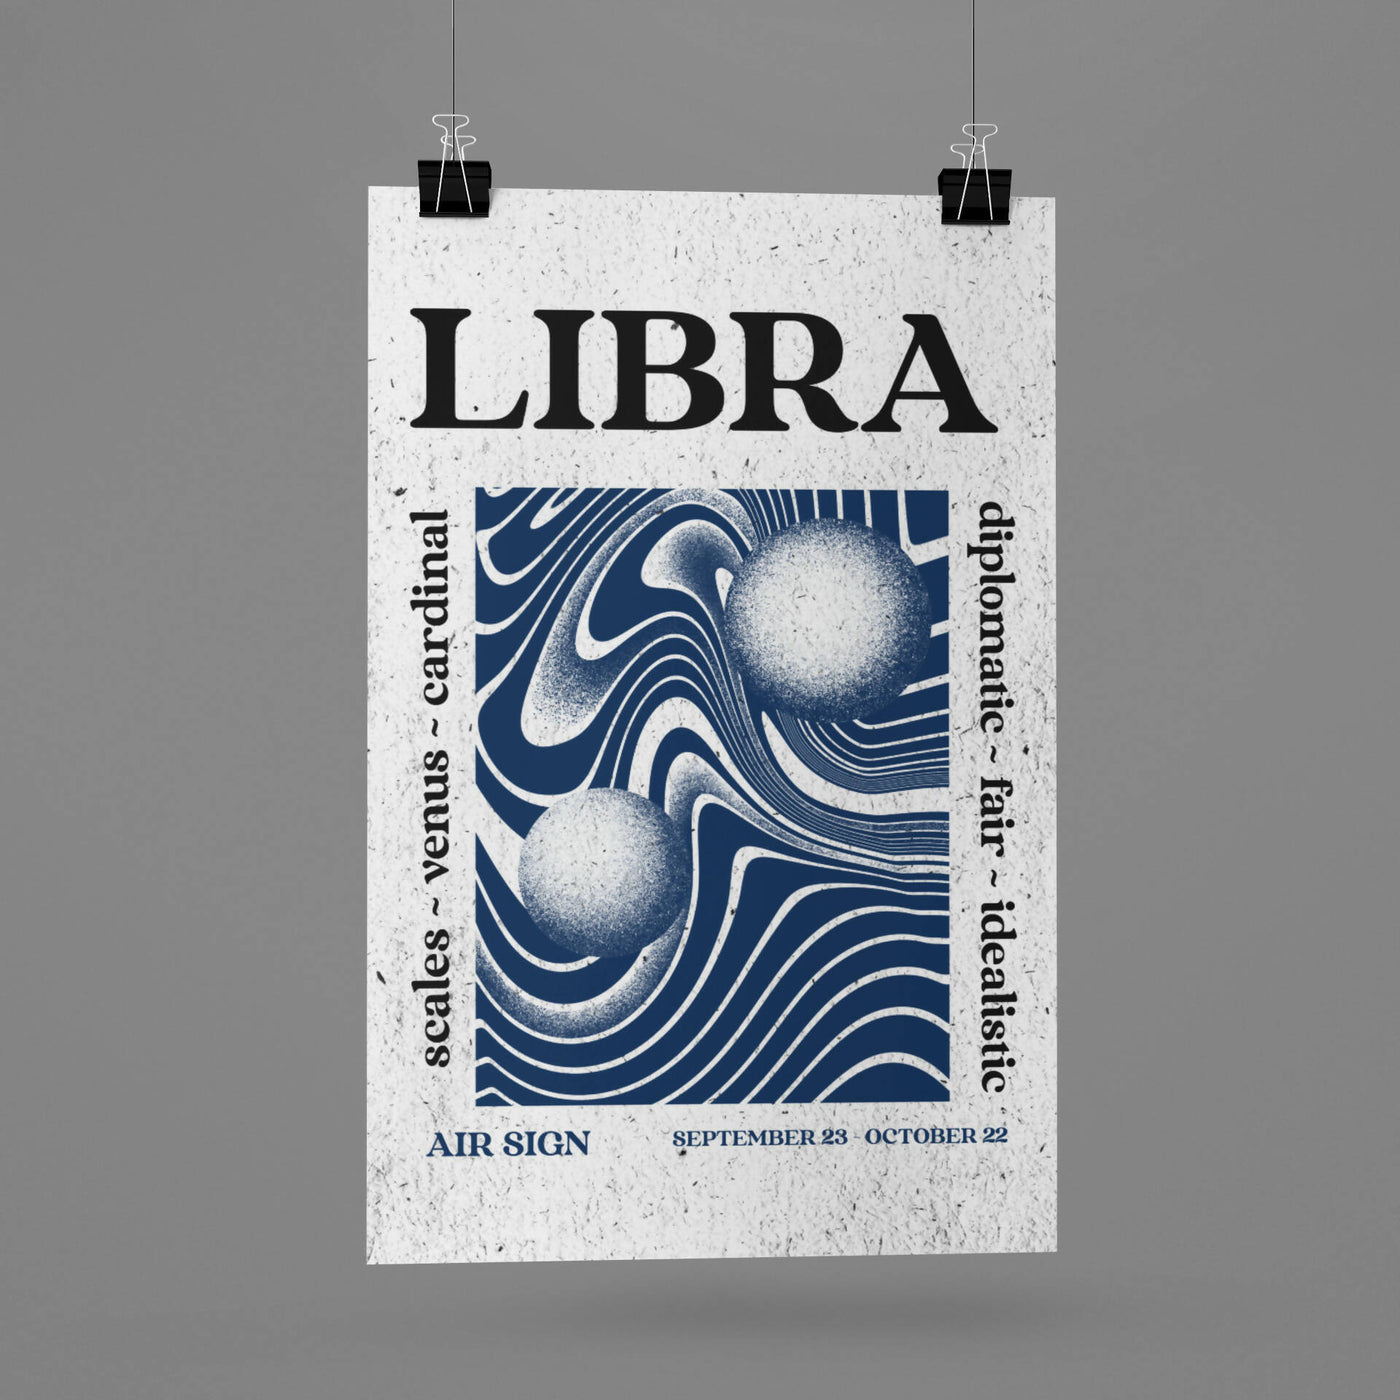 ZODIAC: LIBRA, 1482. Libra, the scales available as Framed Prints